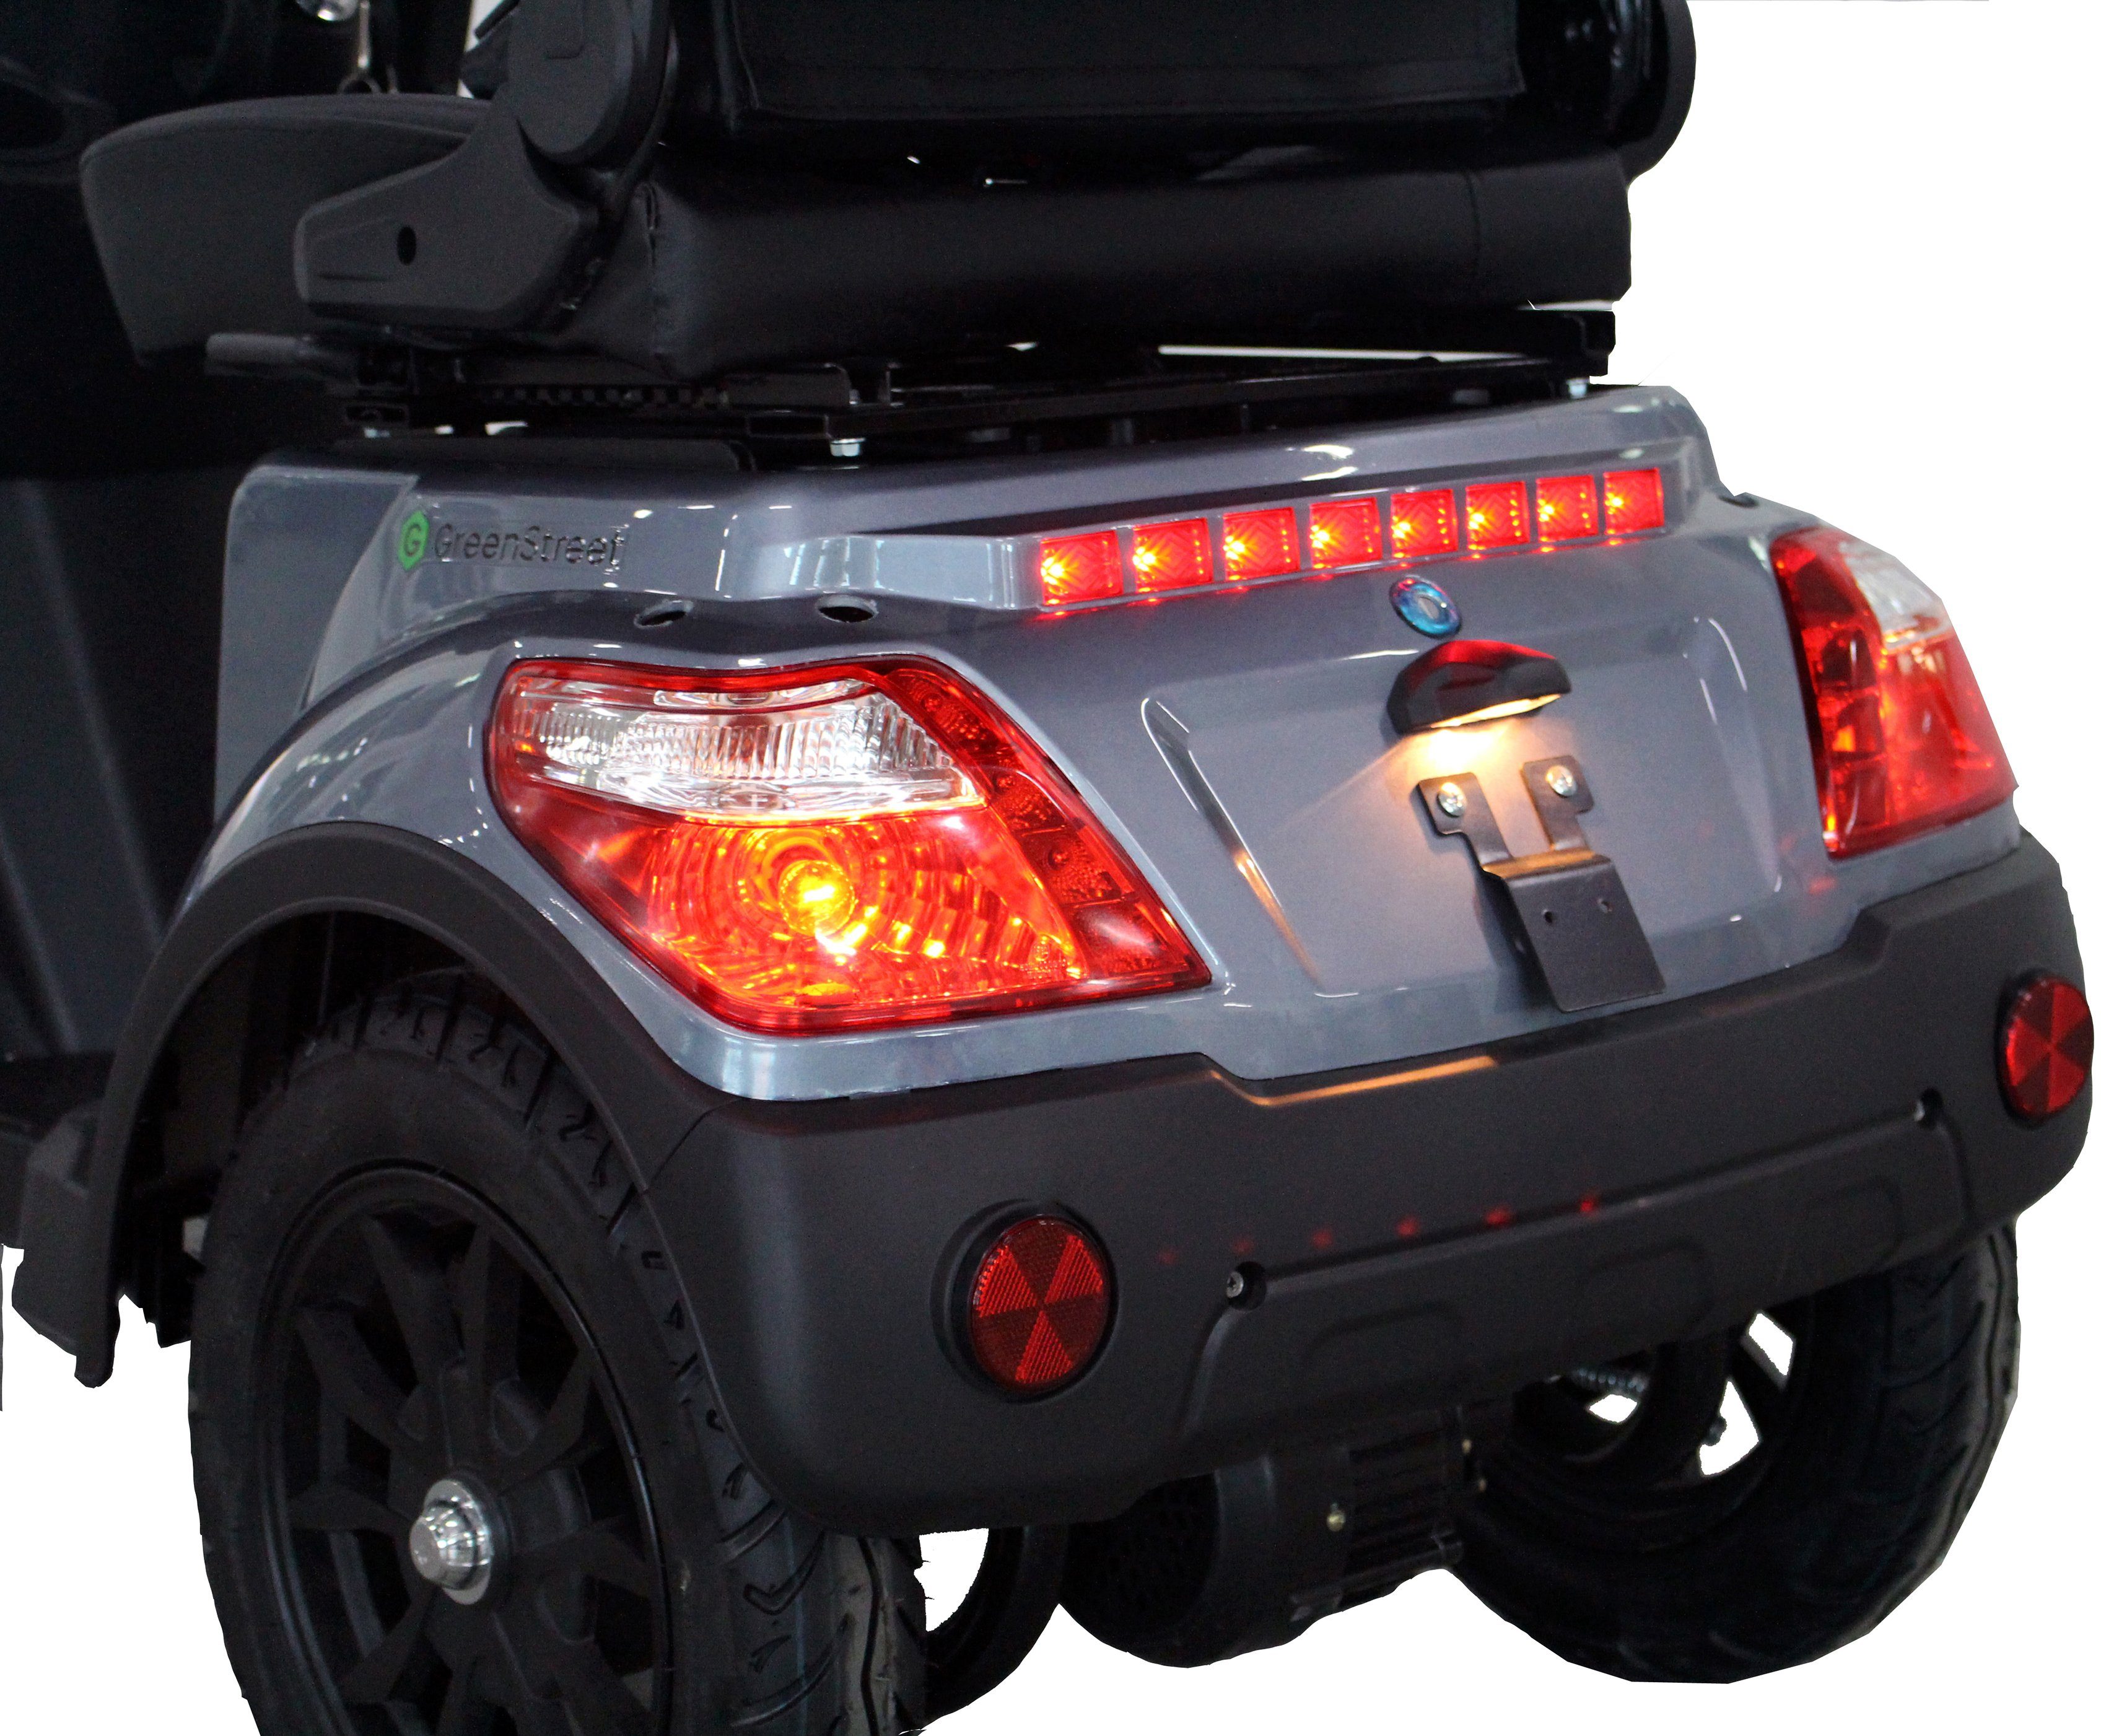 E-Mover mit Topcase Deluxe, Elektromobil Li-Ion-Akku, km/h, 20 1000 W, 60V/26Ah inkl. GreenStreet